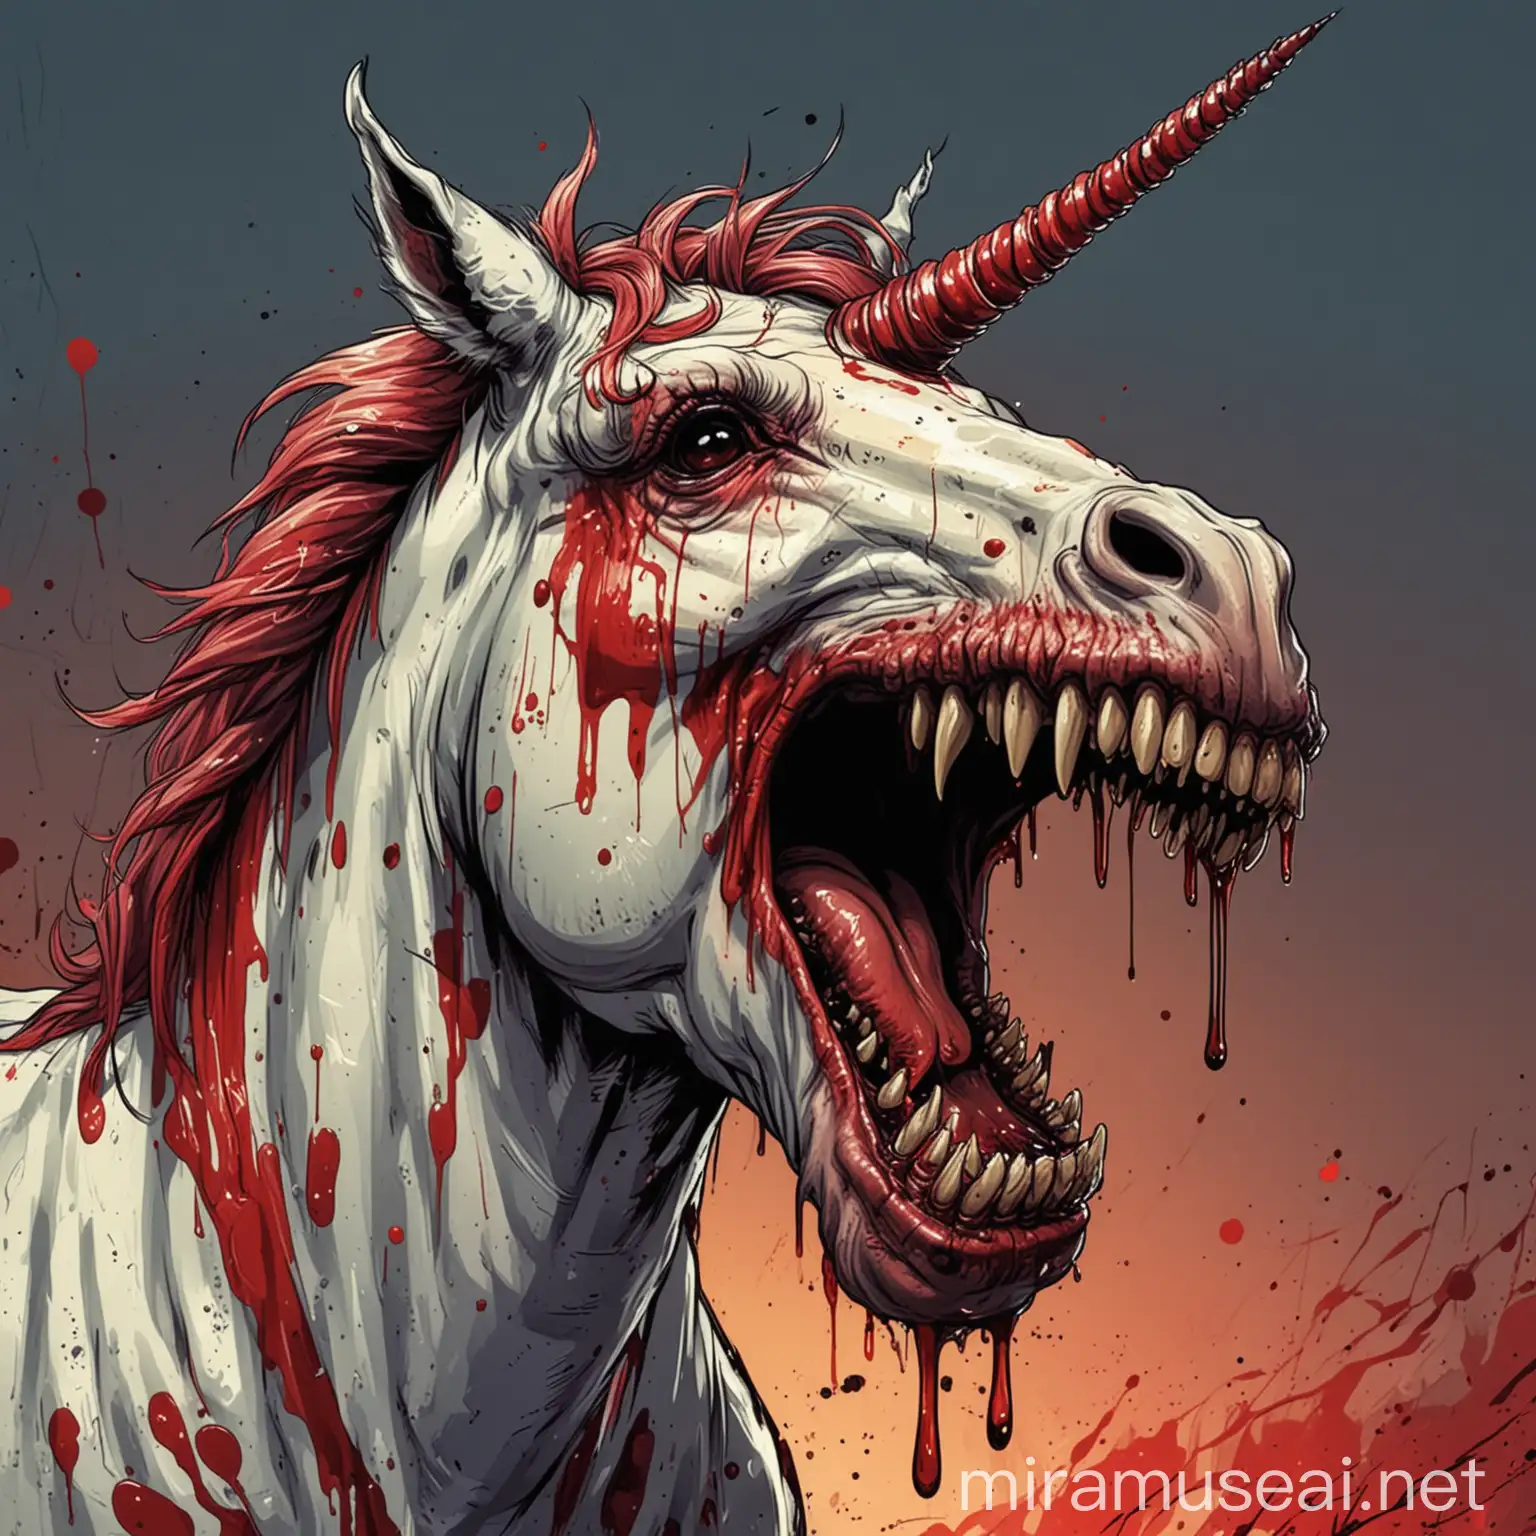 Menacing Bloodthirsty Unicorn with Bared Teeth Comic Style Illustration